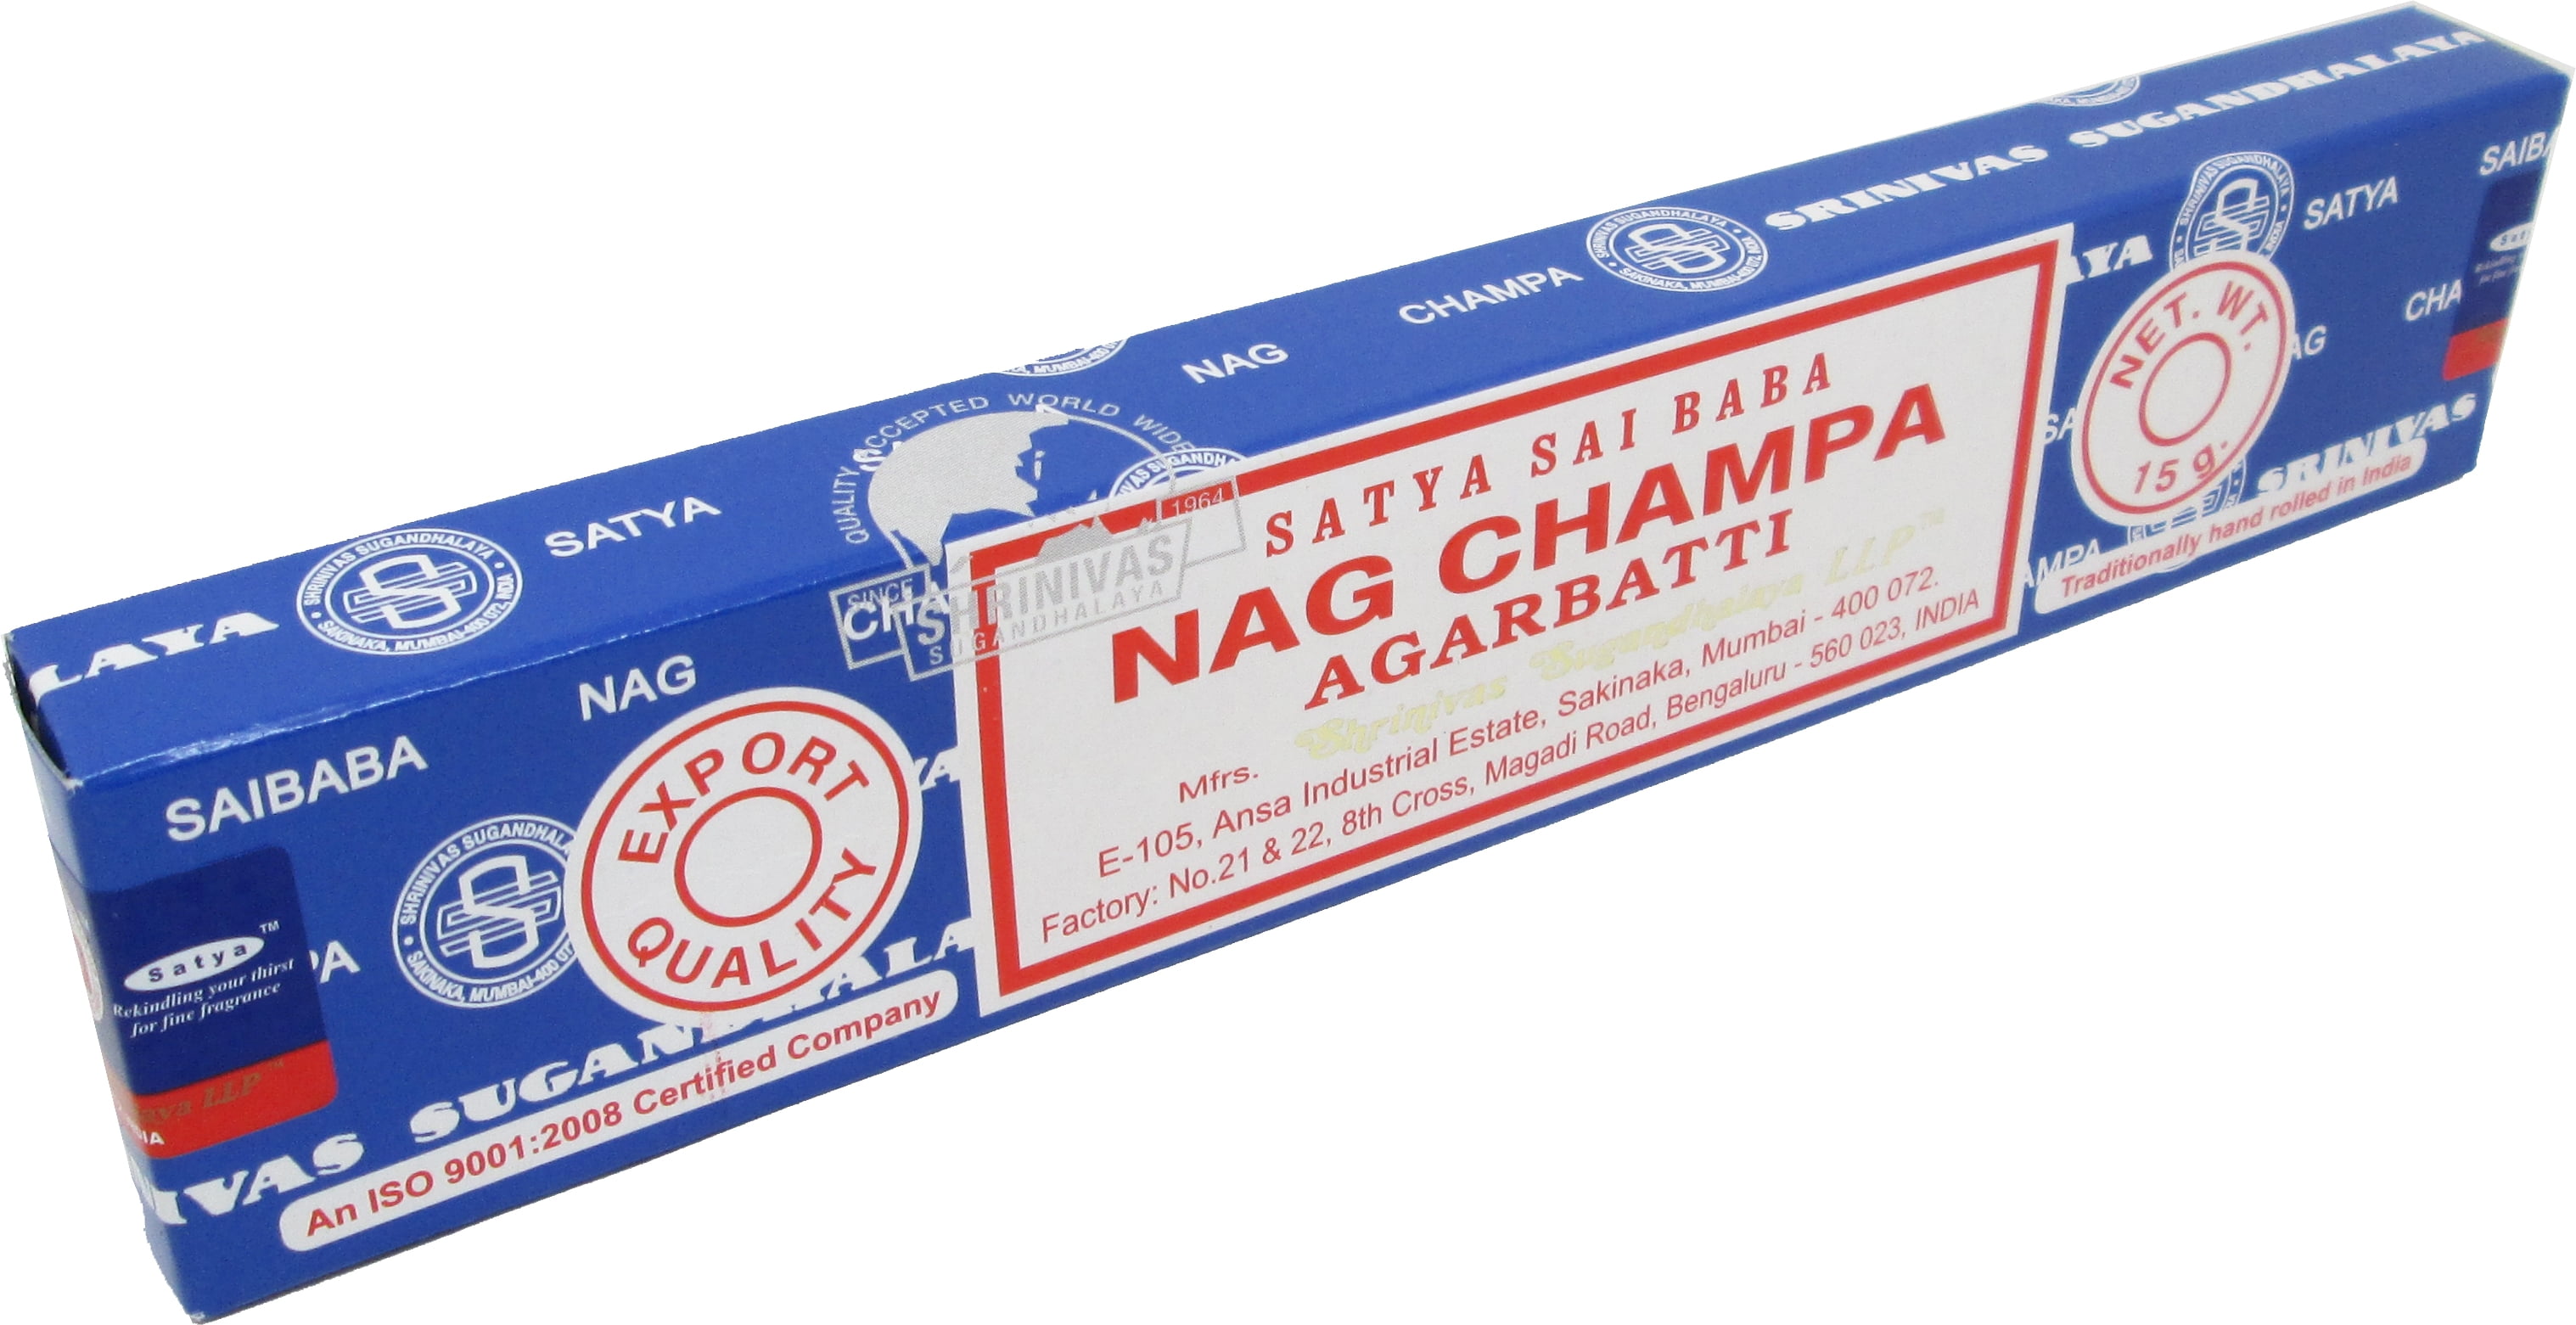 30ml (1 ounce) Satya Sai Baba NAG CHAMPA Air Freshener or